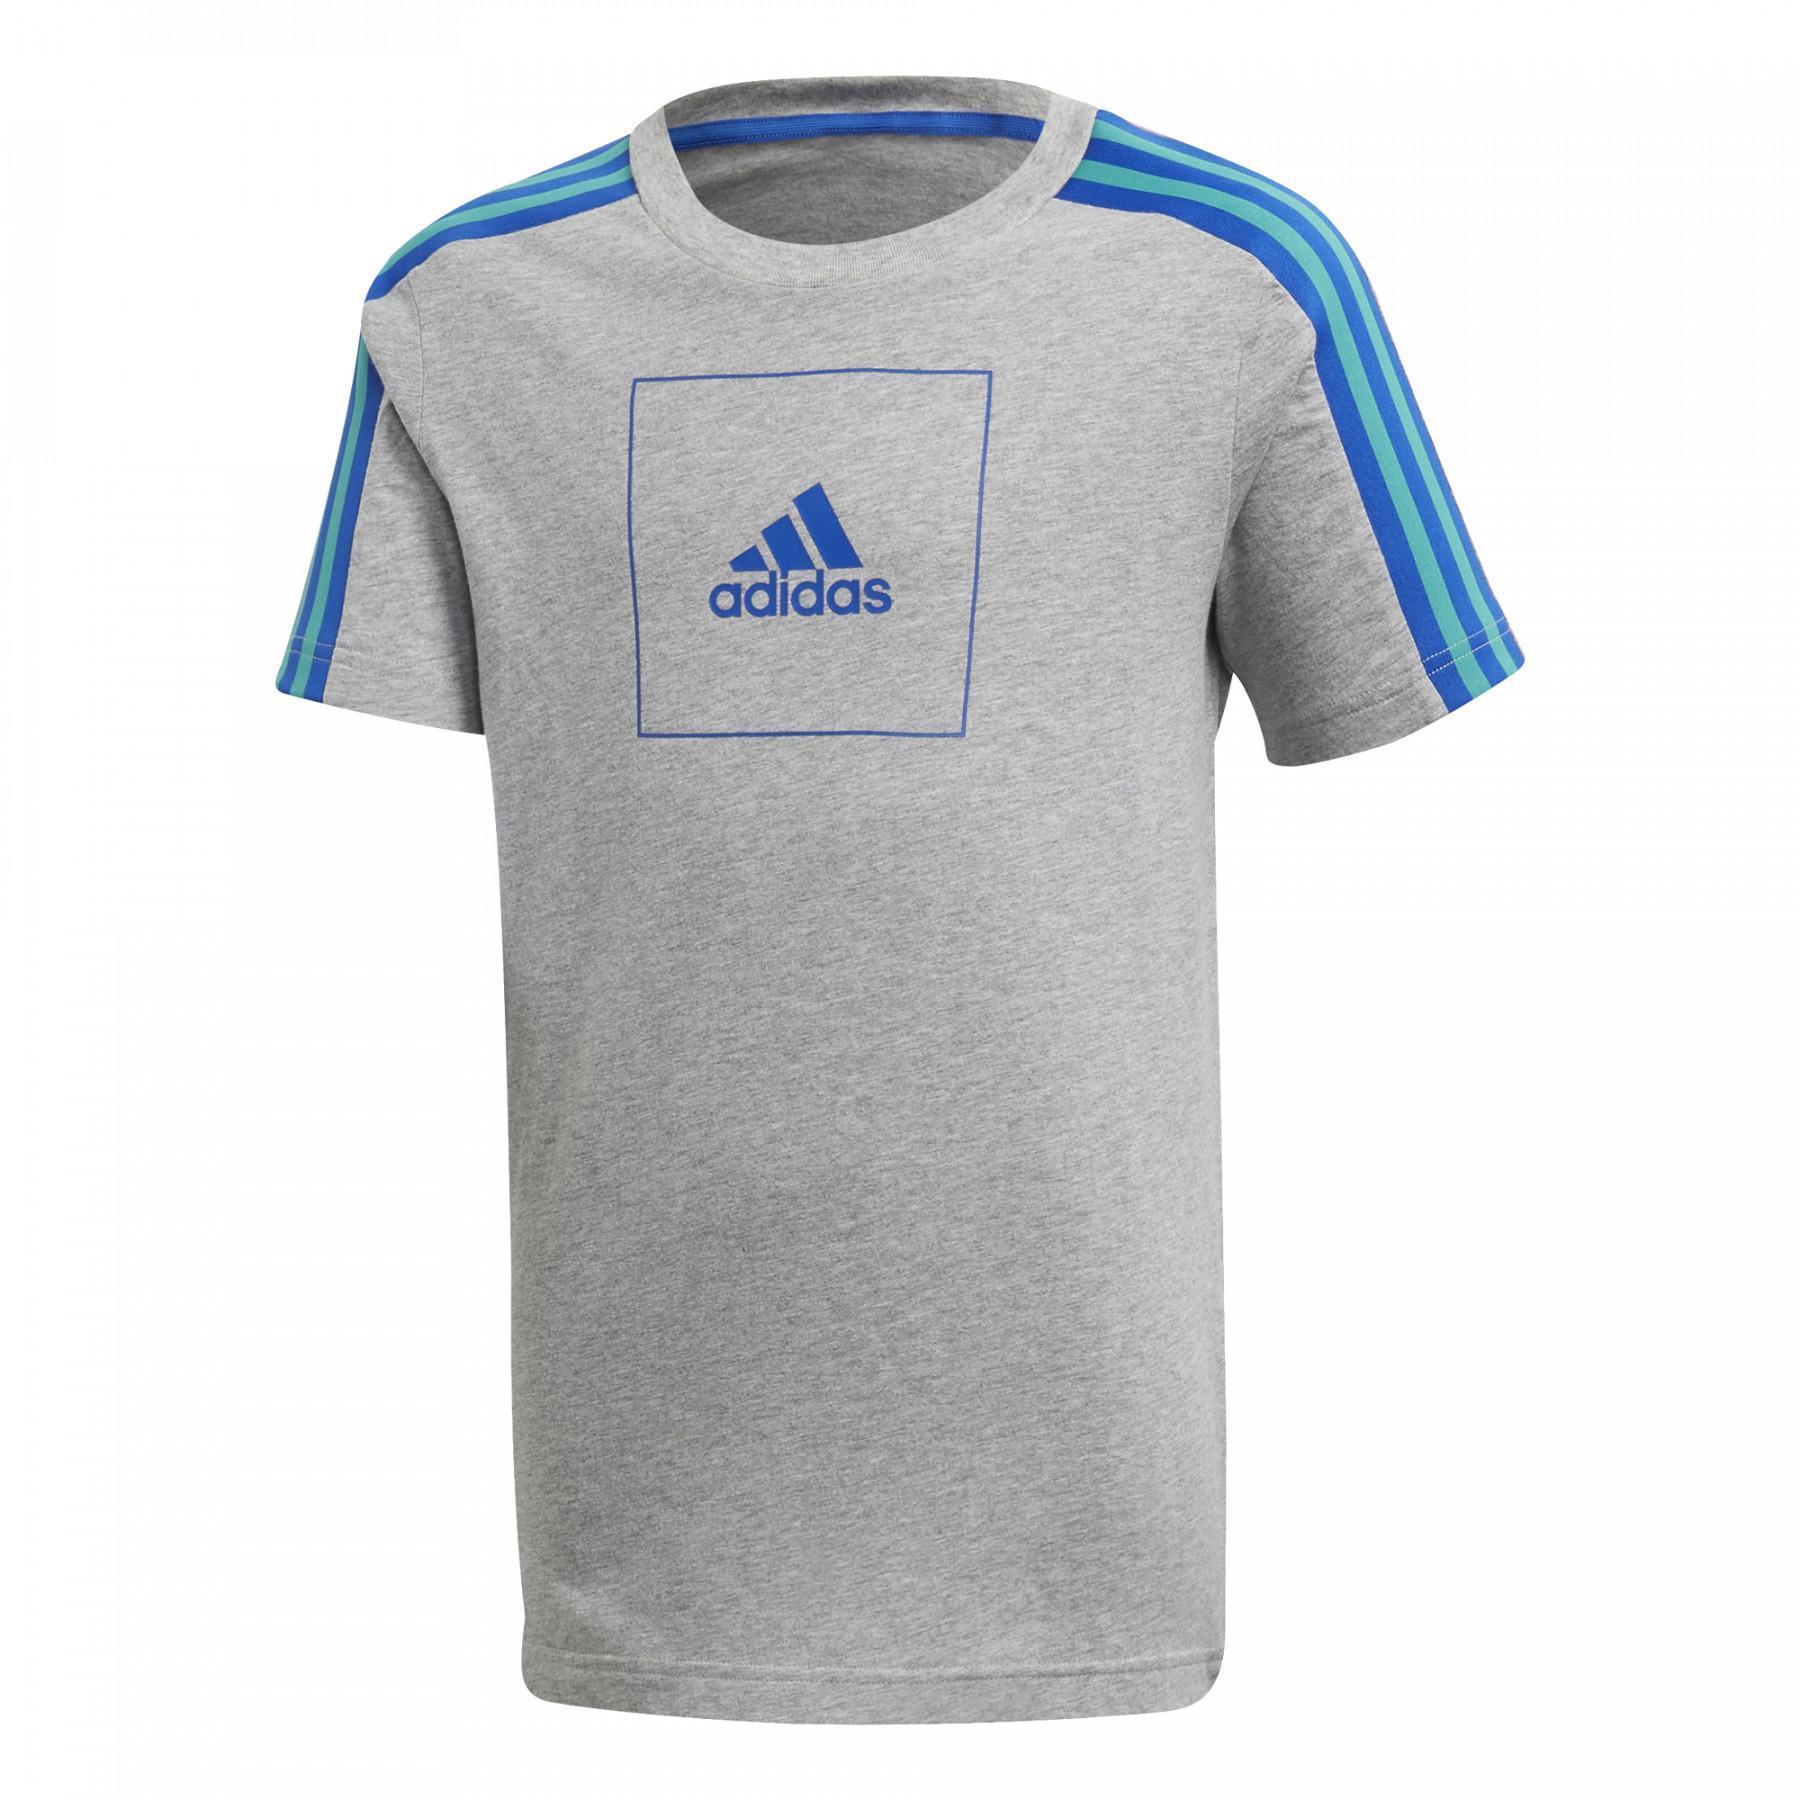 Child's T-shirt adidas Athletics Club